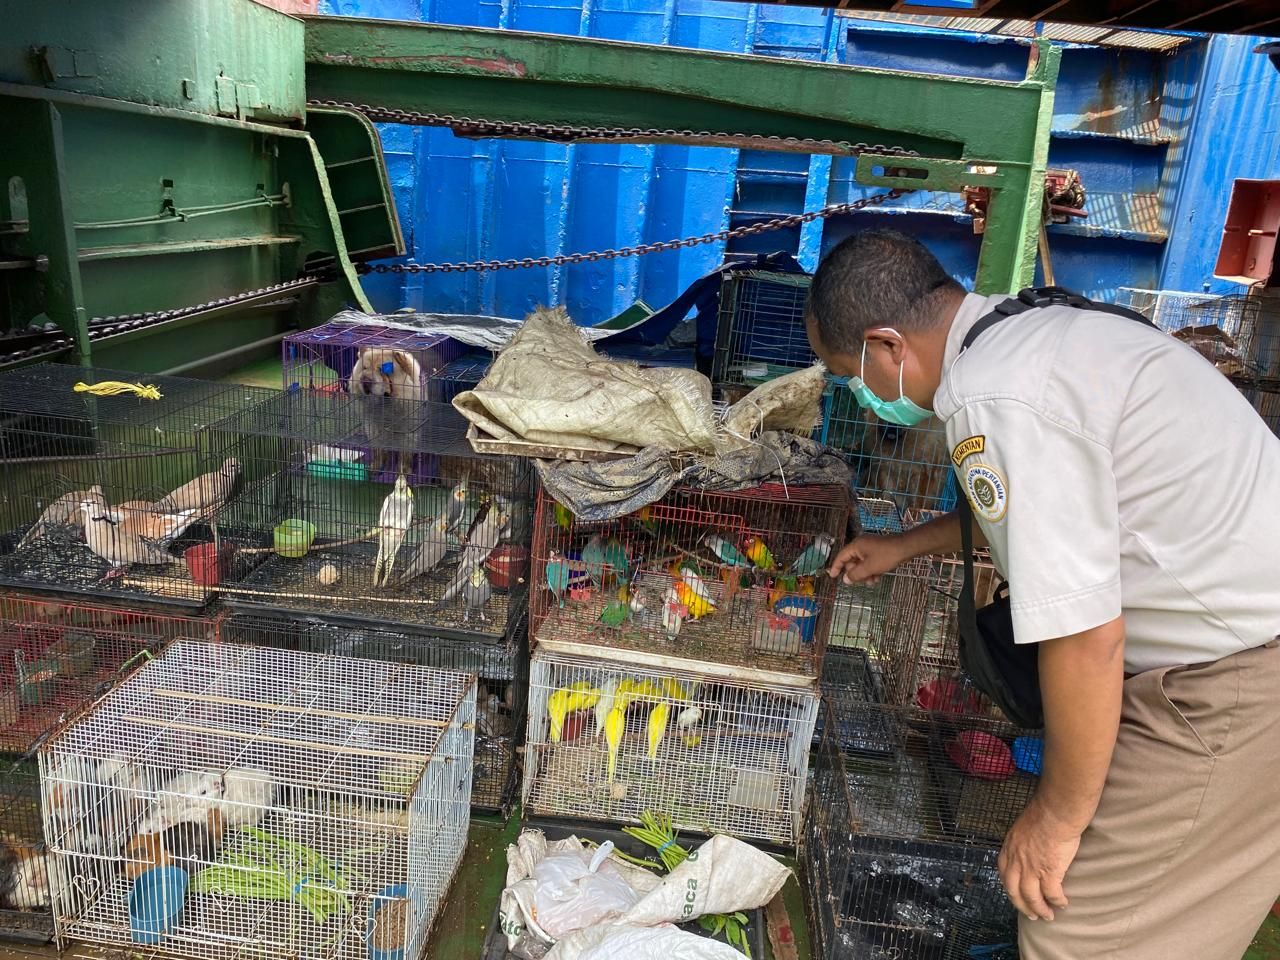 Petugas Gagalkan Penyelundupan 83 Burung dan 10 Anjing dari Surabaya ke NTT via Perbatasan RI-Timor Leste